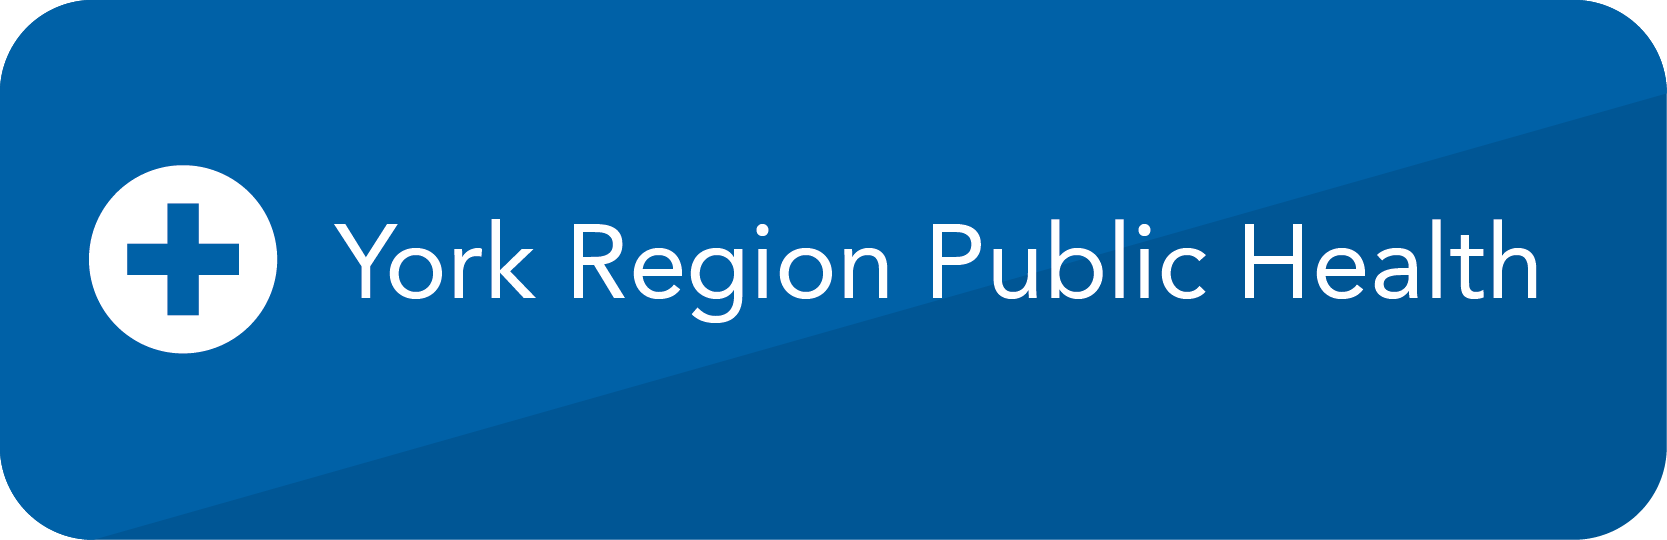 york region public health button